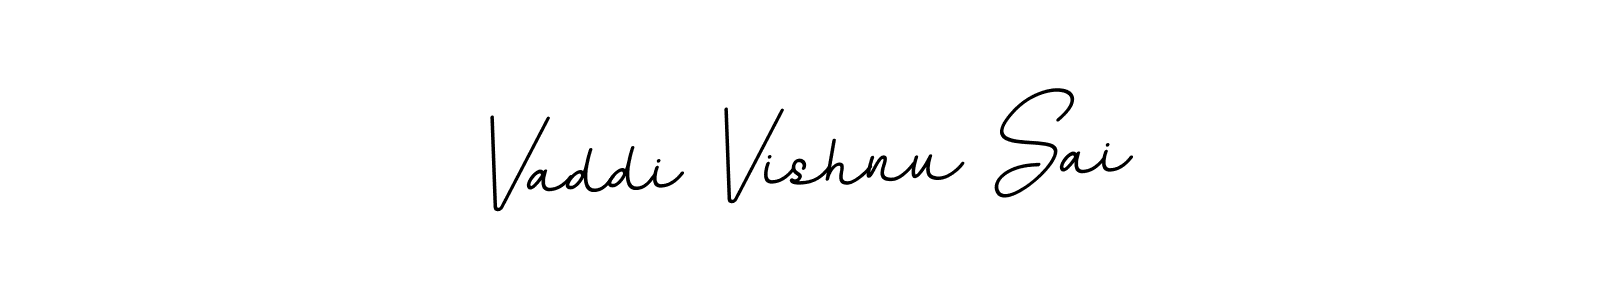 How to make Vaddi Vishnu Sai signature? BallpointsItalic-DORy9 is a professional autograph style. Create handwritten signature for Vaddi Vishnu Sai name. Vaddi Vishnu Sai signature style 11 images and pictures png